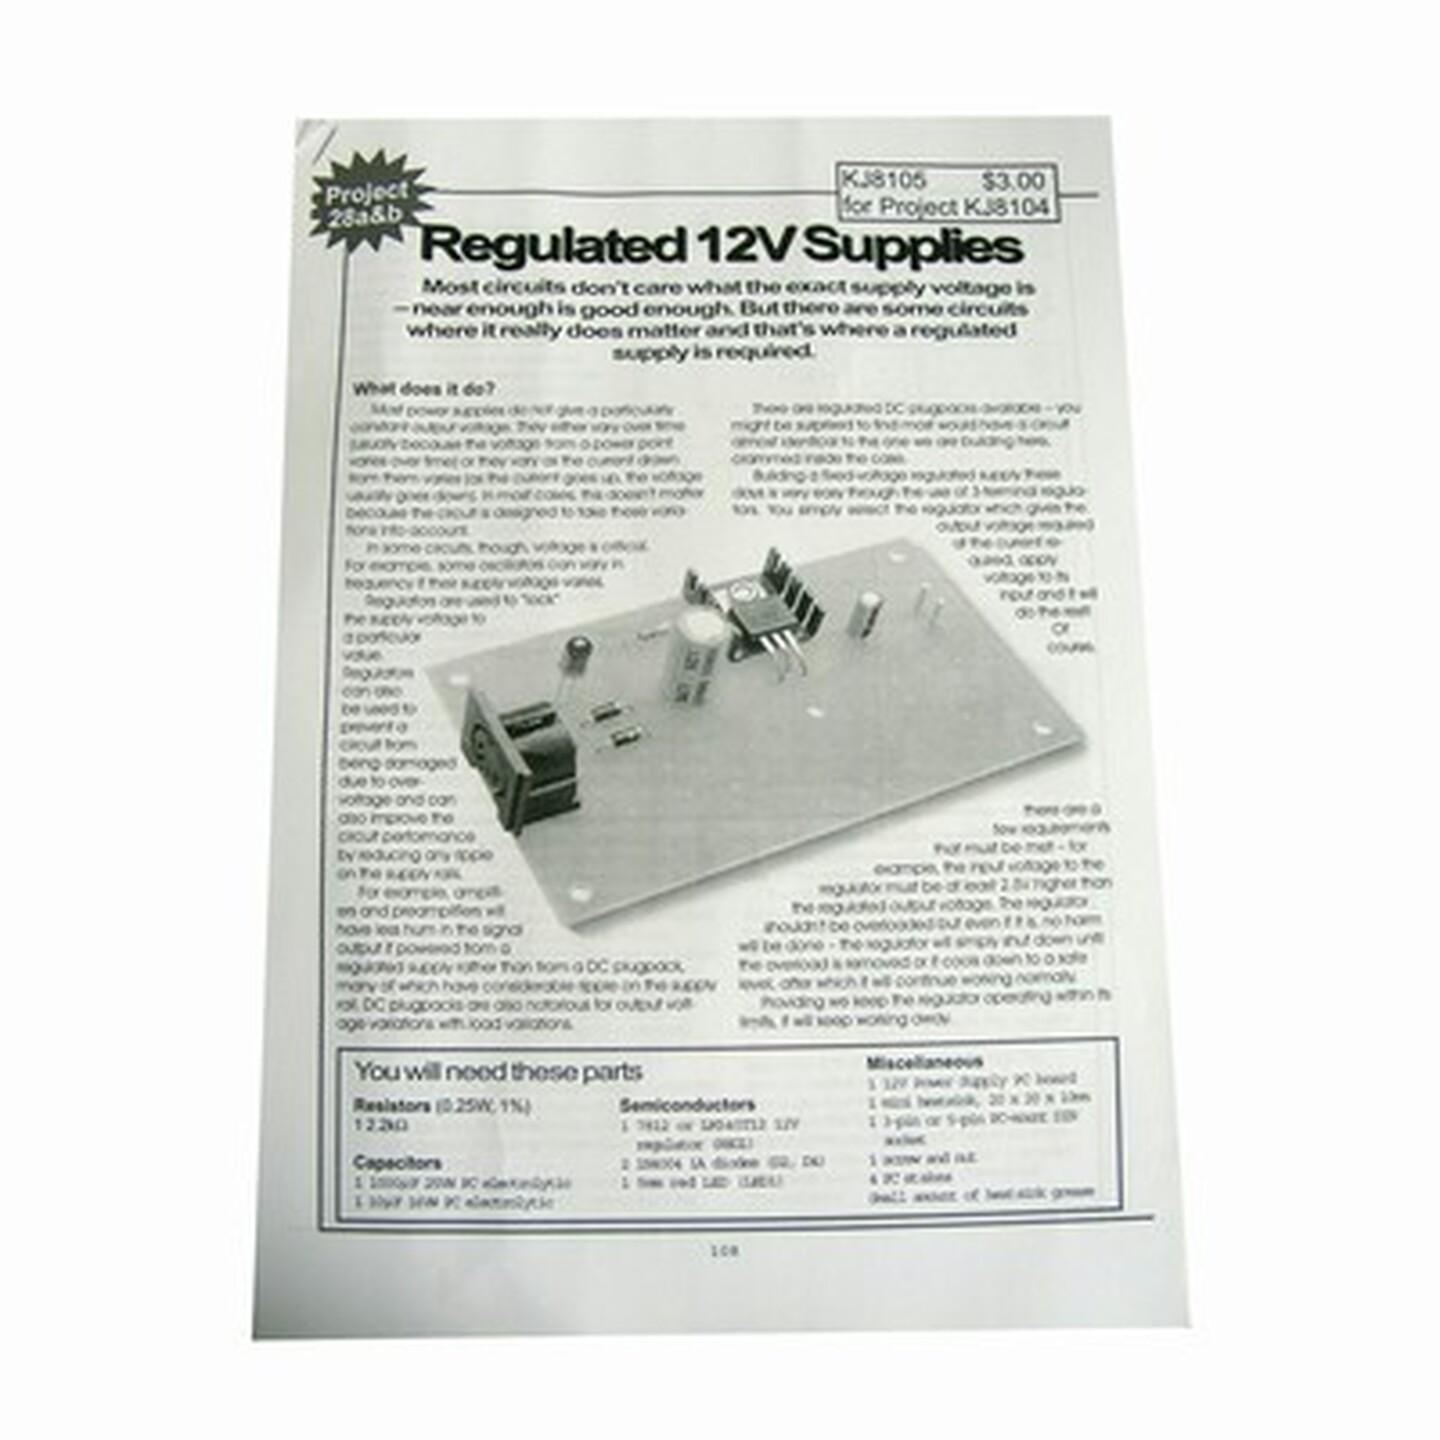 Regulated 12V Power Supply Instructions